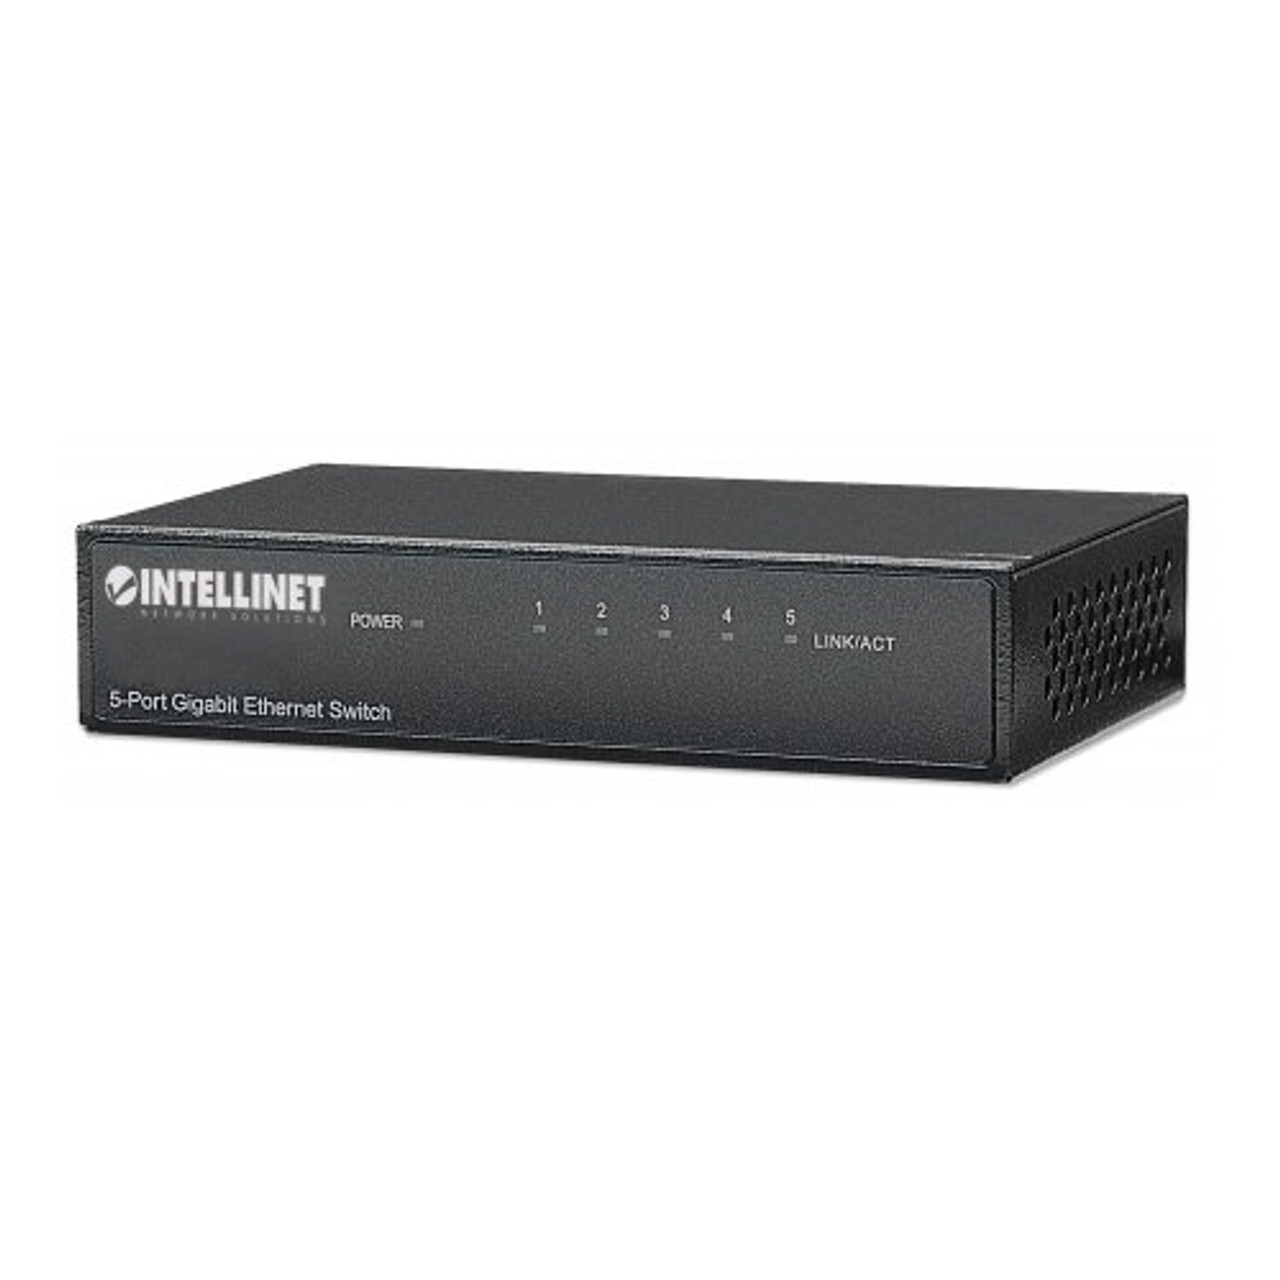 Intellinet 5-Port Gigabit Ethernet PoE+ Switch with SFP Port (561822)